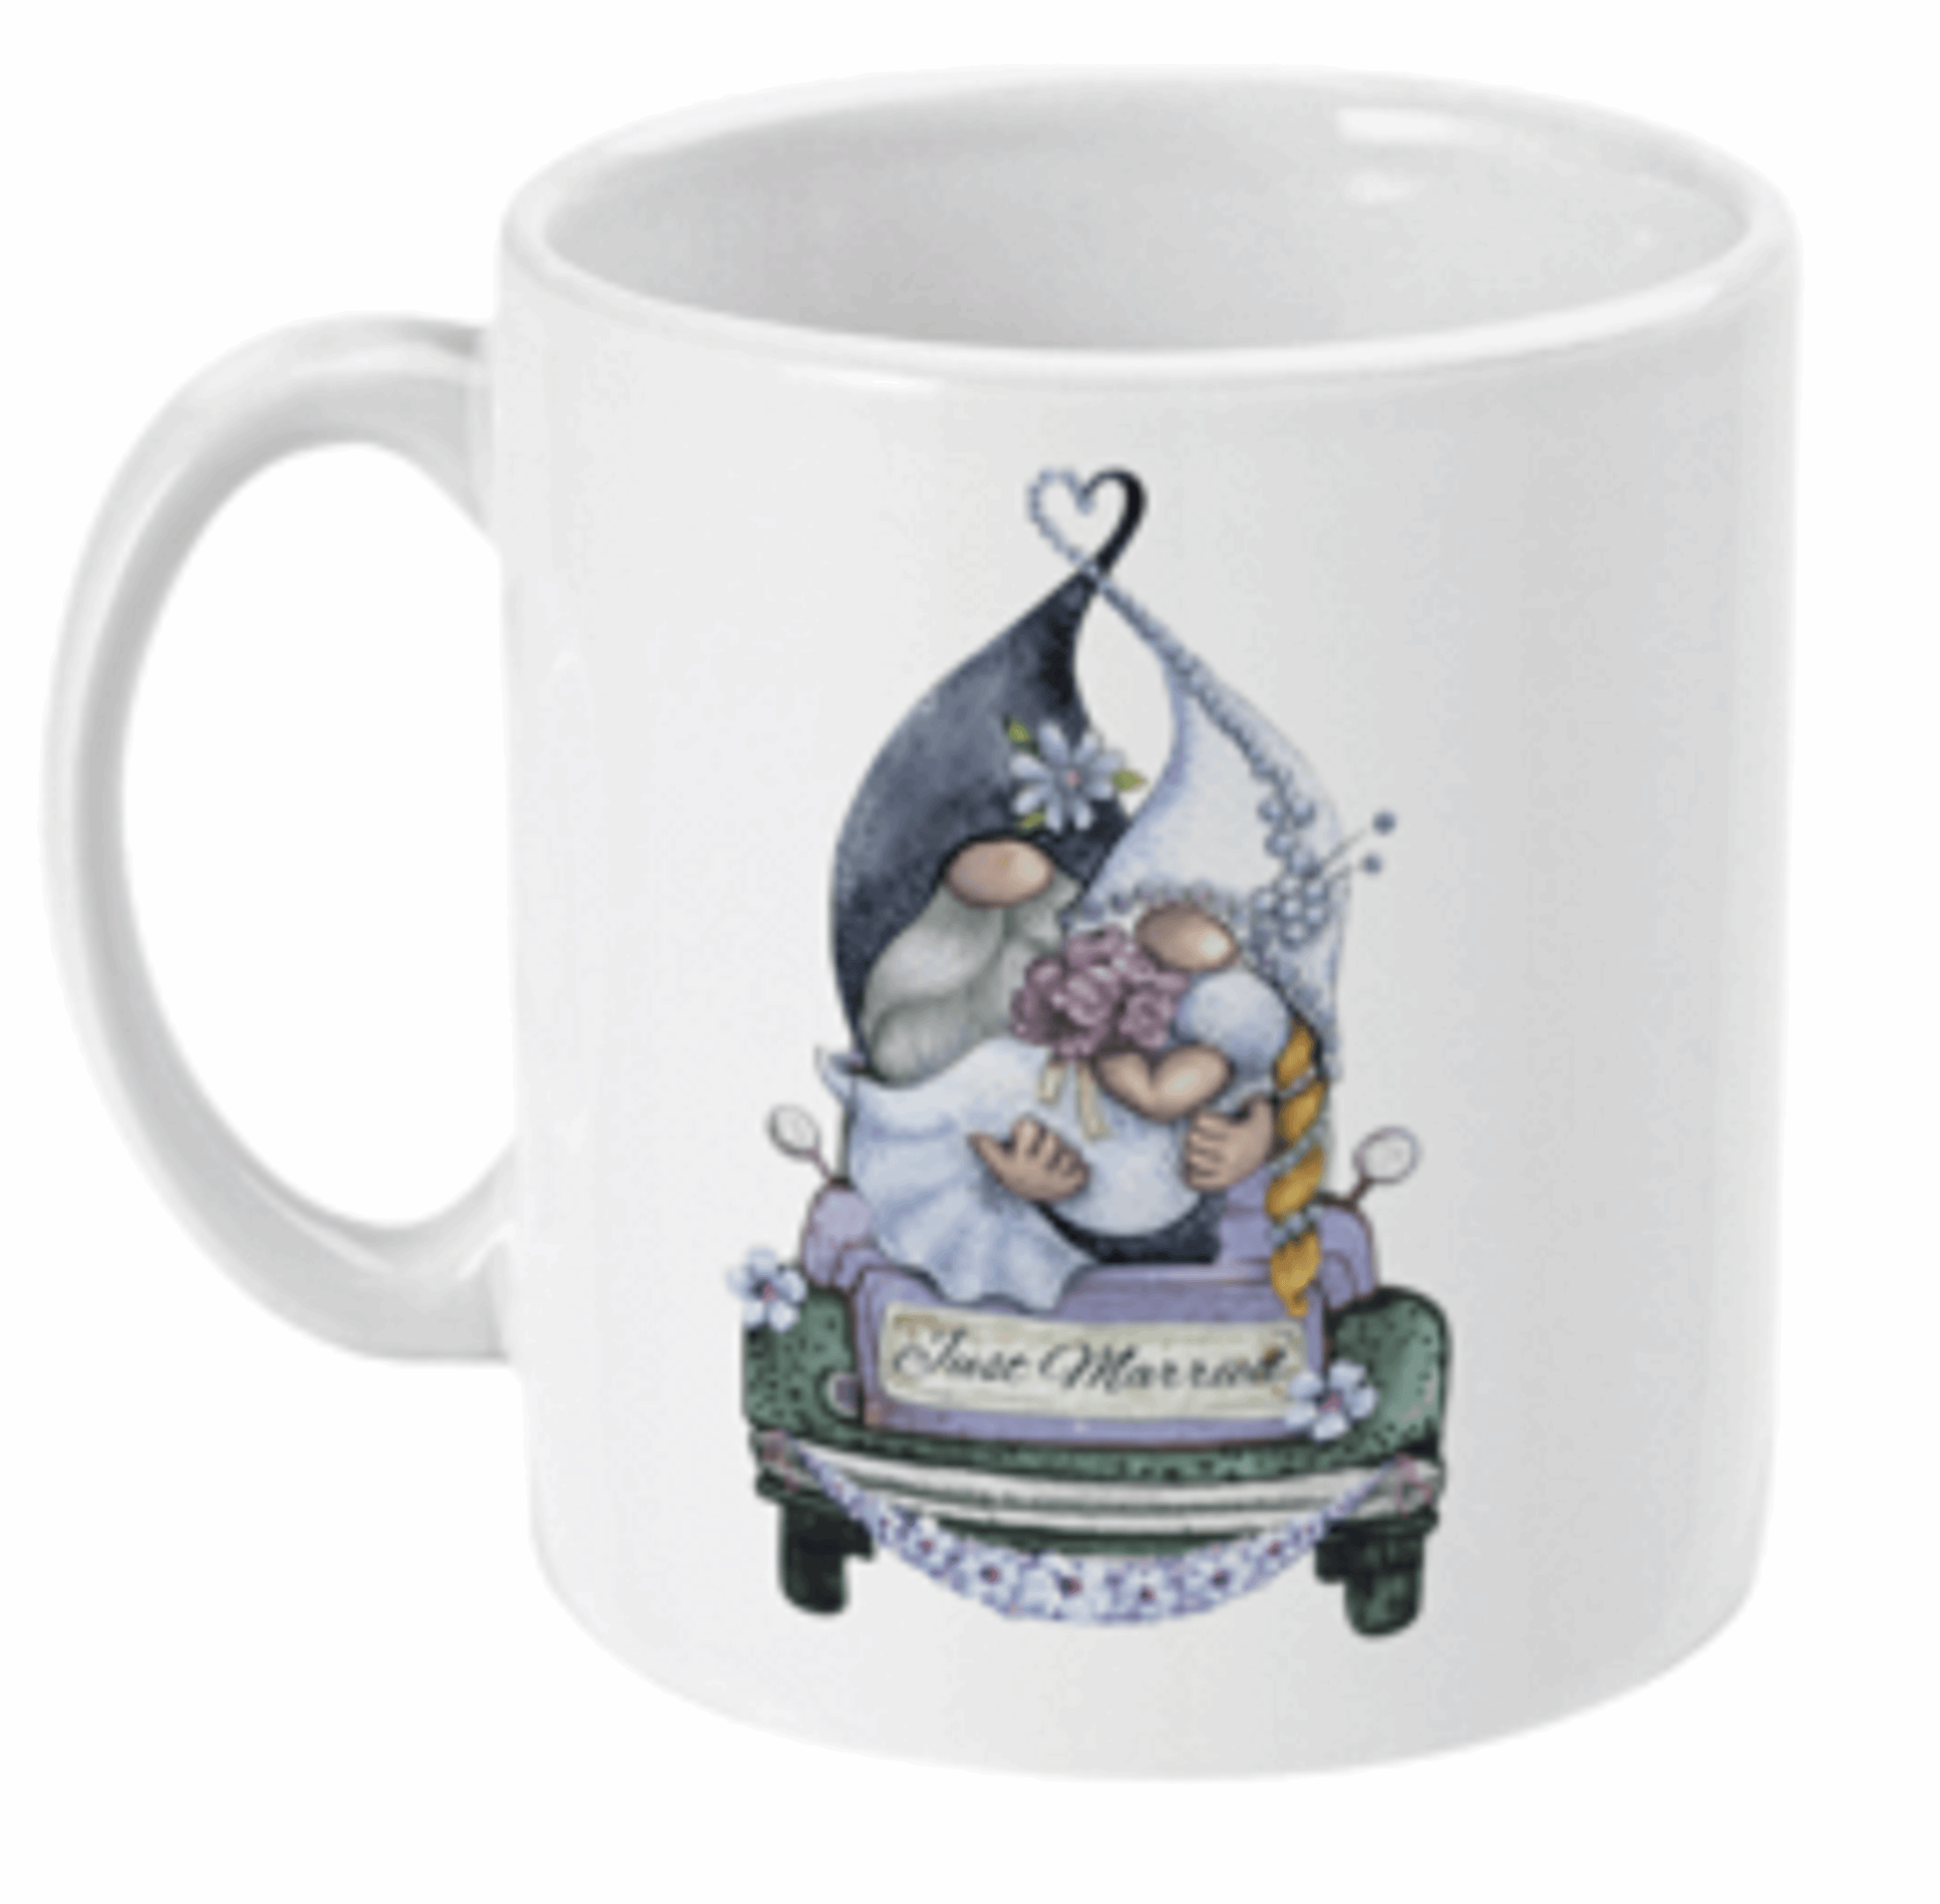  Just Married Wedding Gnomes Coffee Mug by Free Spirit Accessories sold by Free Spirit Accessories